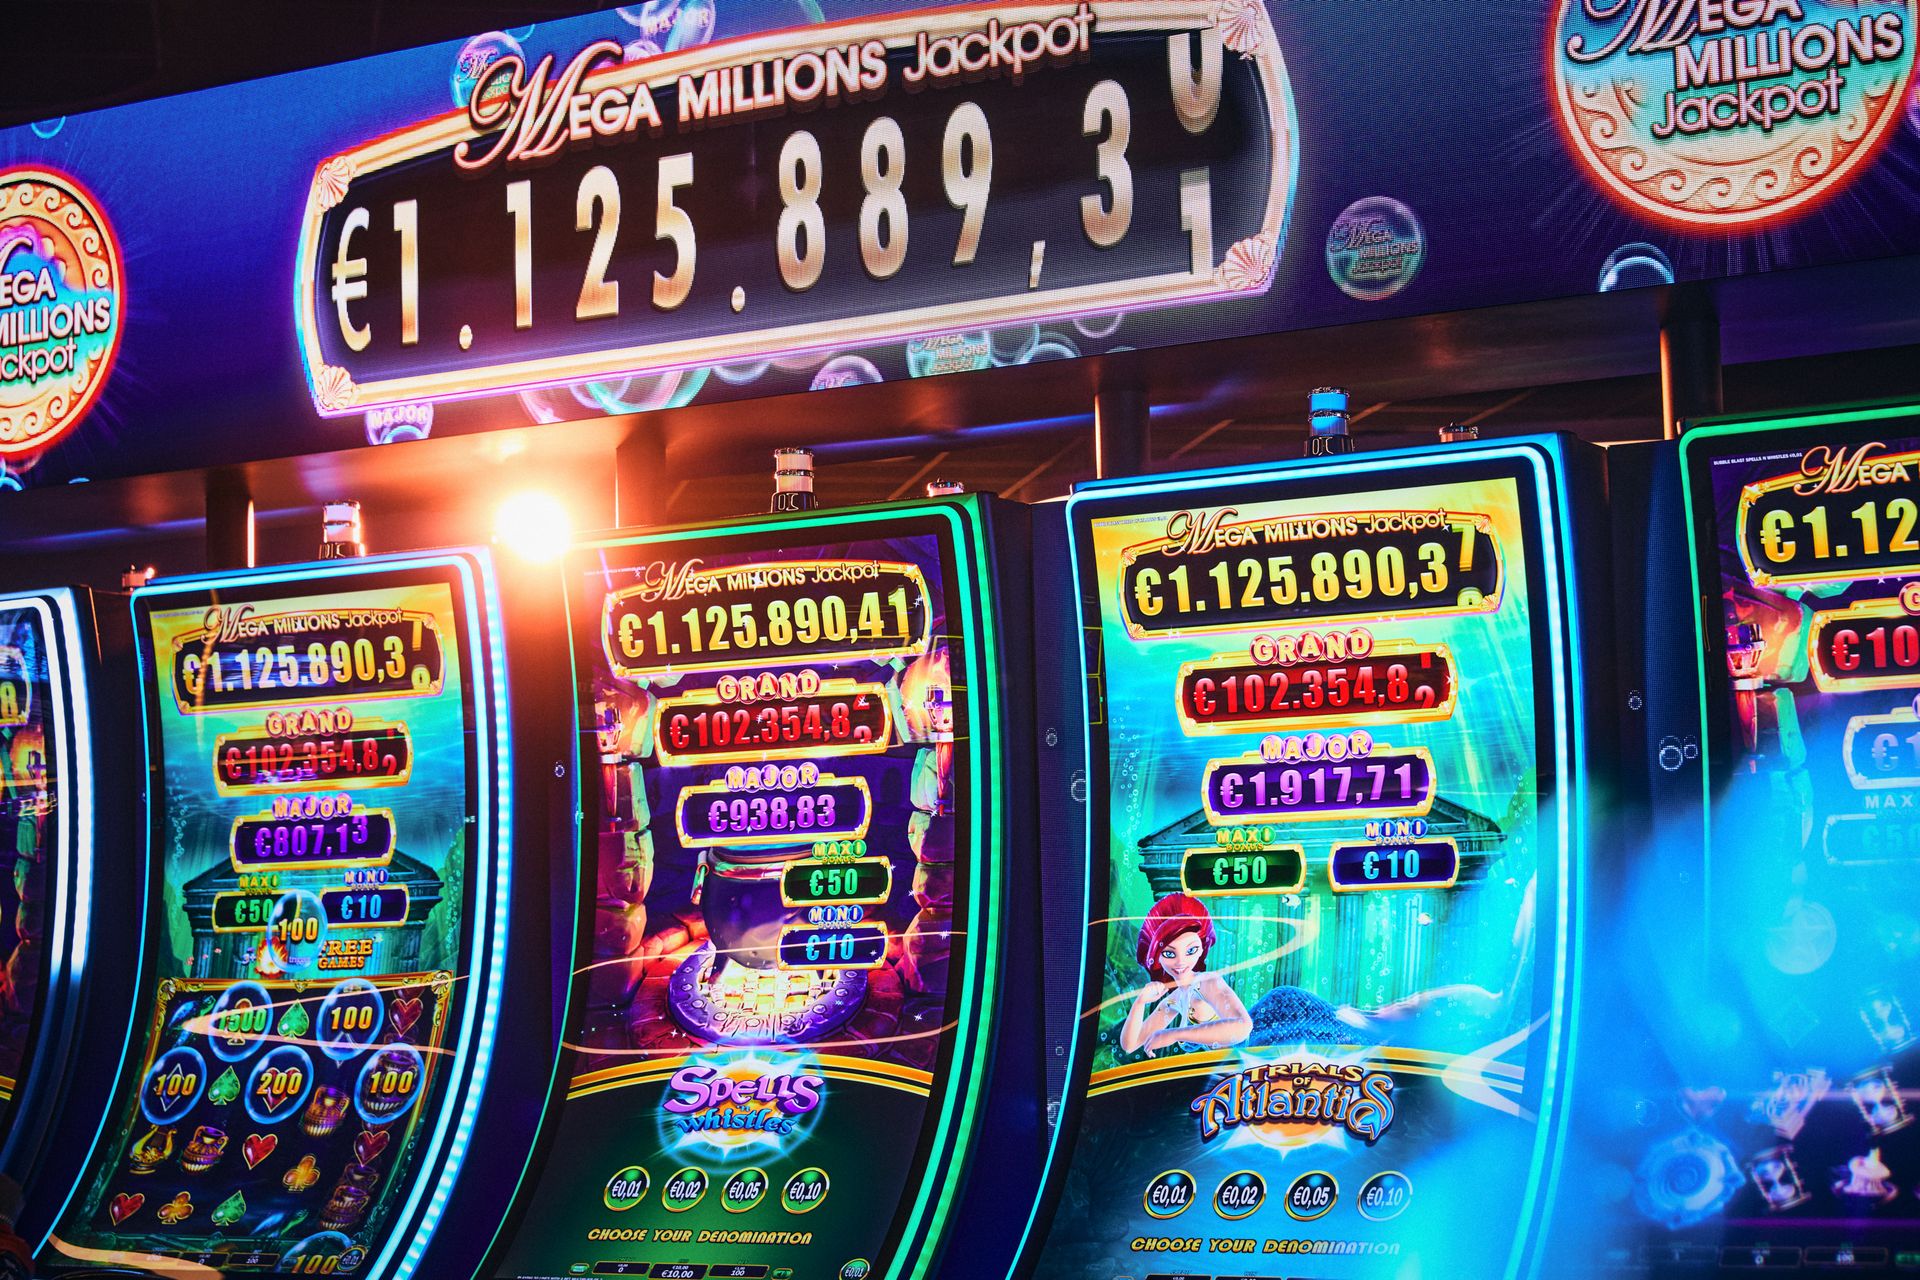 holland casino mega millions jackpot